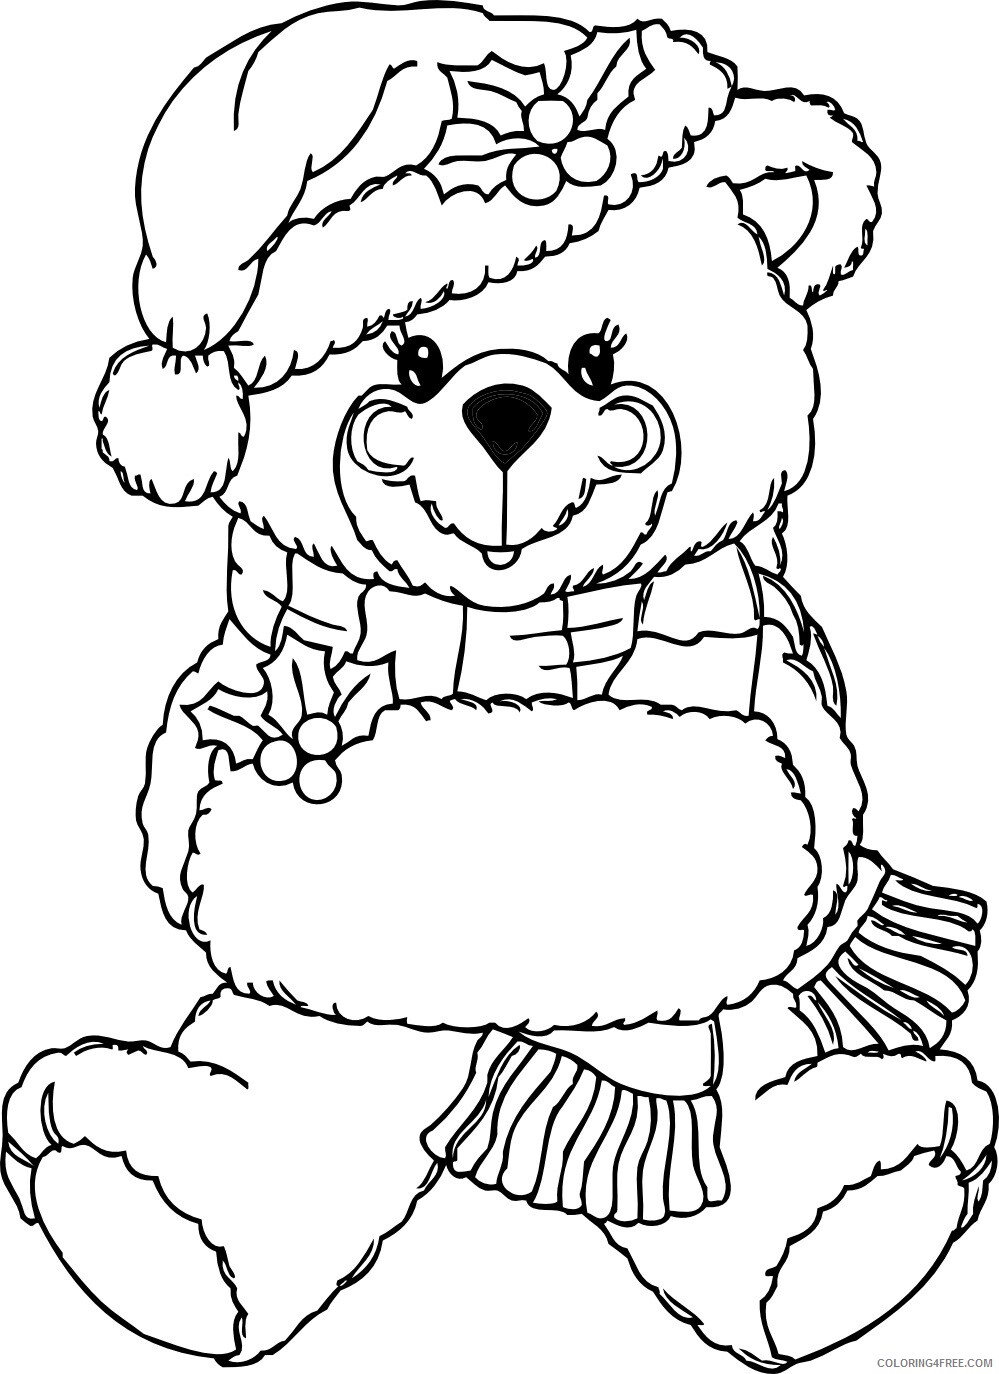 Bear Coloring Pages Animal Printable Sheets Printable Teddy Bear 2021 0311 Coloring4free